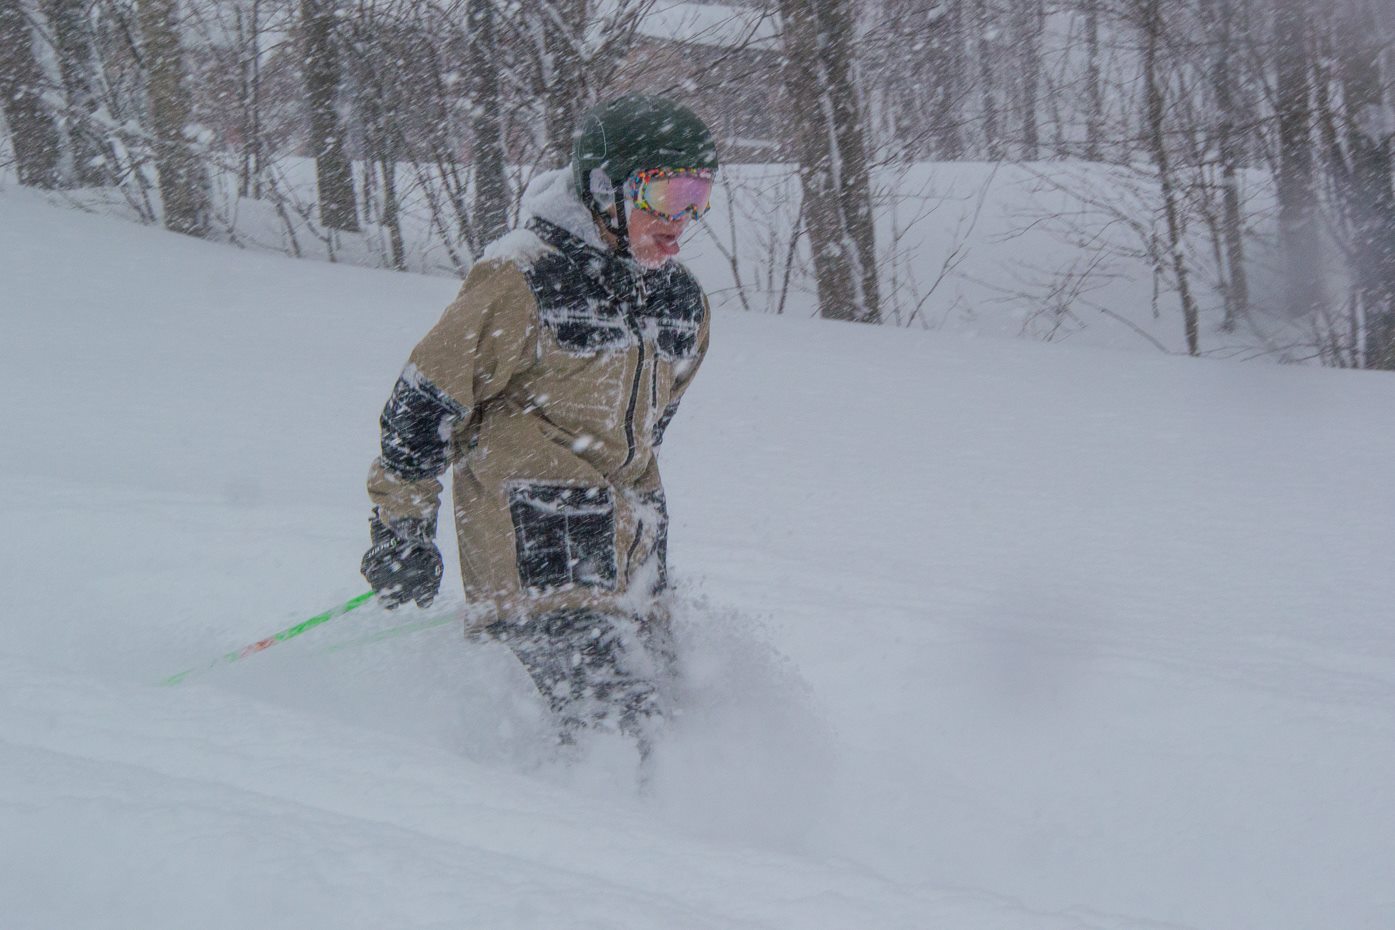 Quebec Ski Resort Sets New Snowfall Record